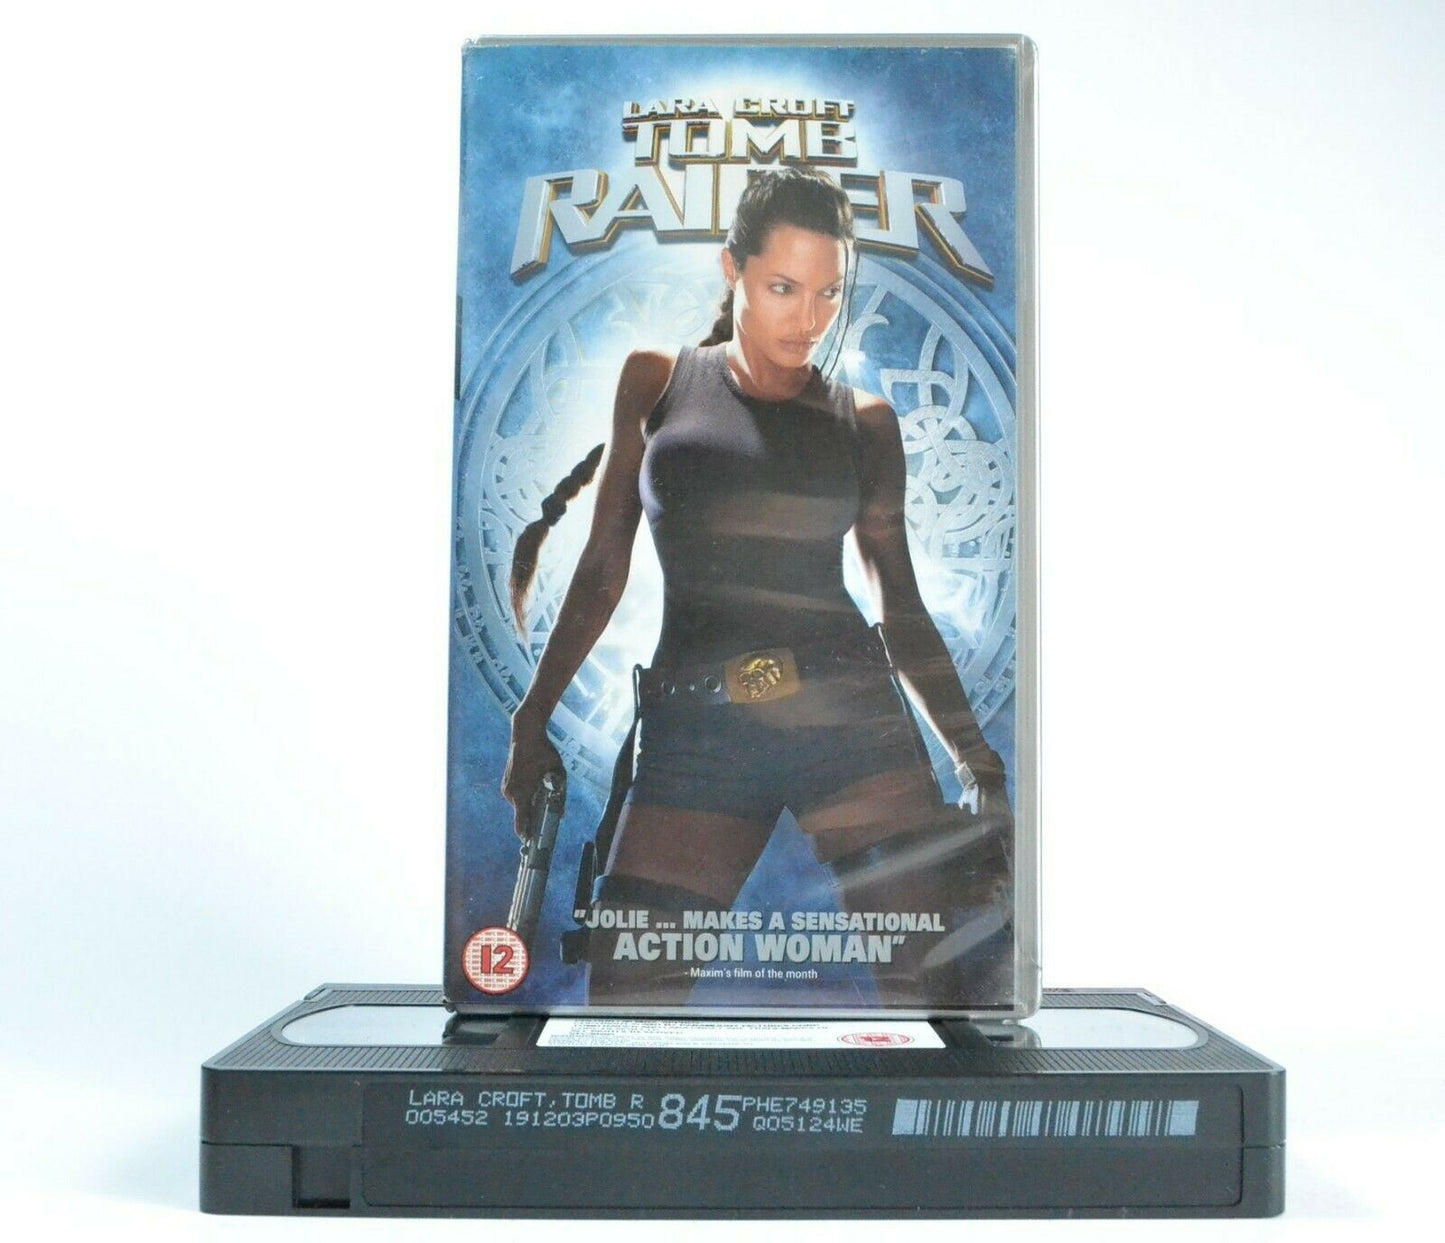 Lara Croft: Tomb Raider - Based On Video Game - Action Adventure - A.Jolie - VHS-